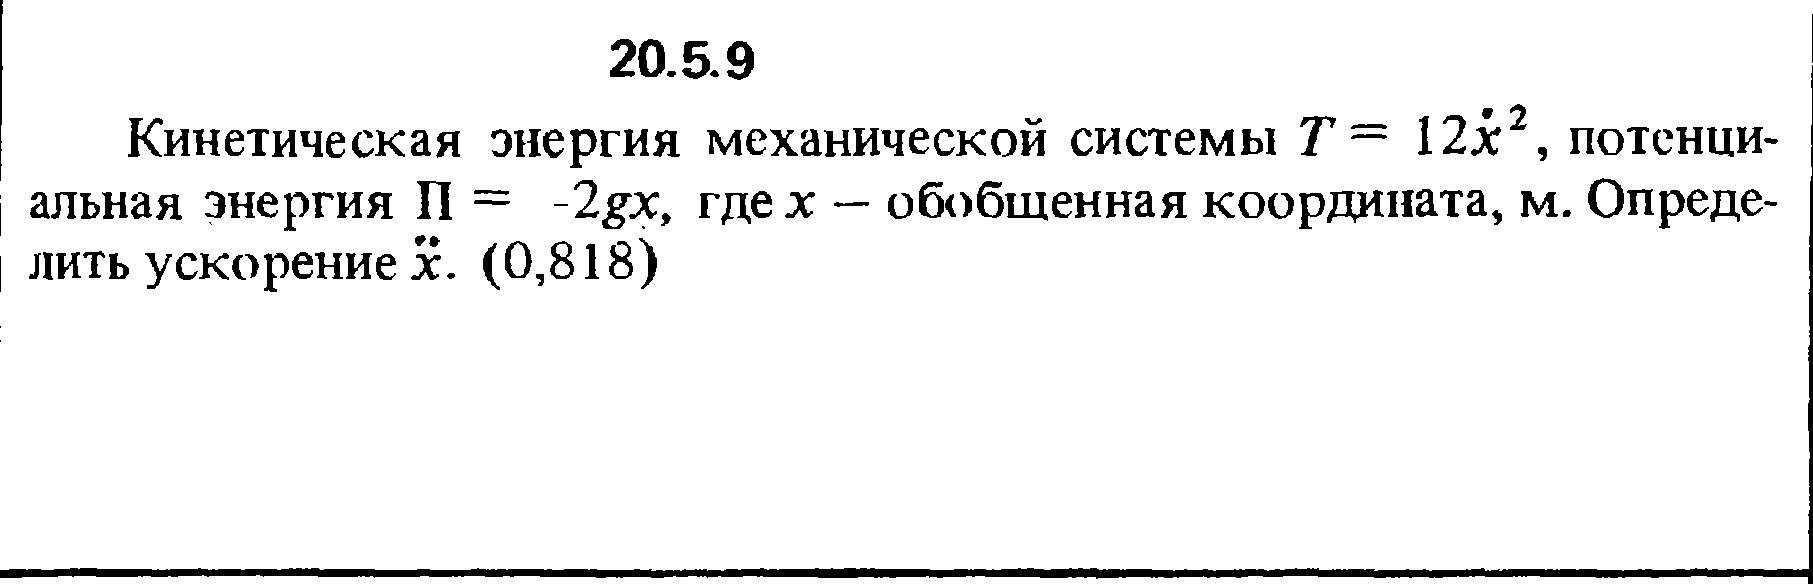 Решение 20.5.9 из сборника (решебника) Кепе О.Е. 1989